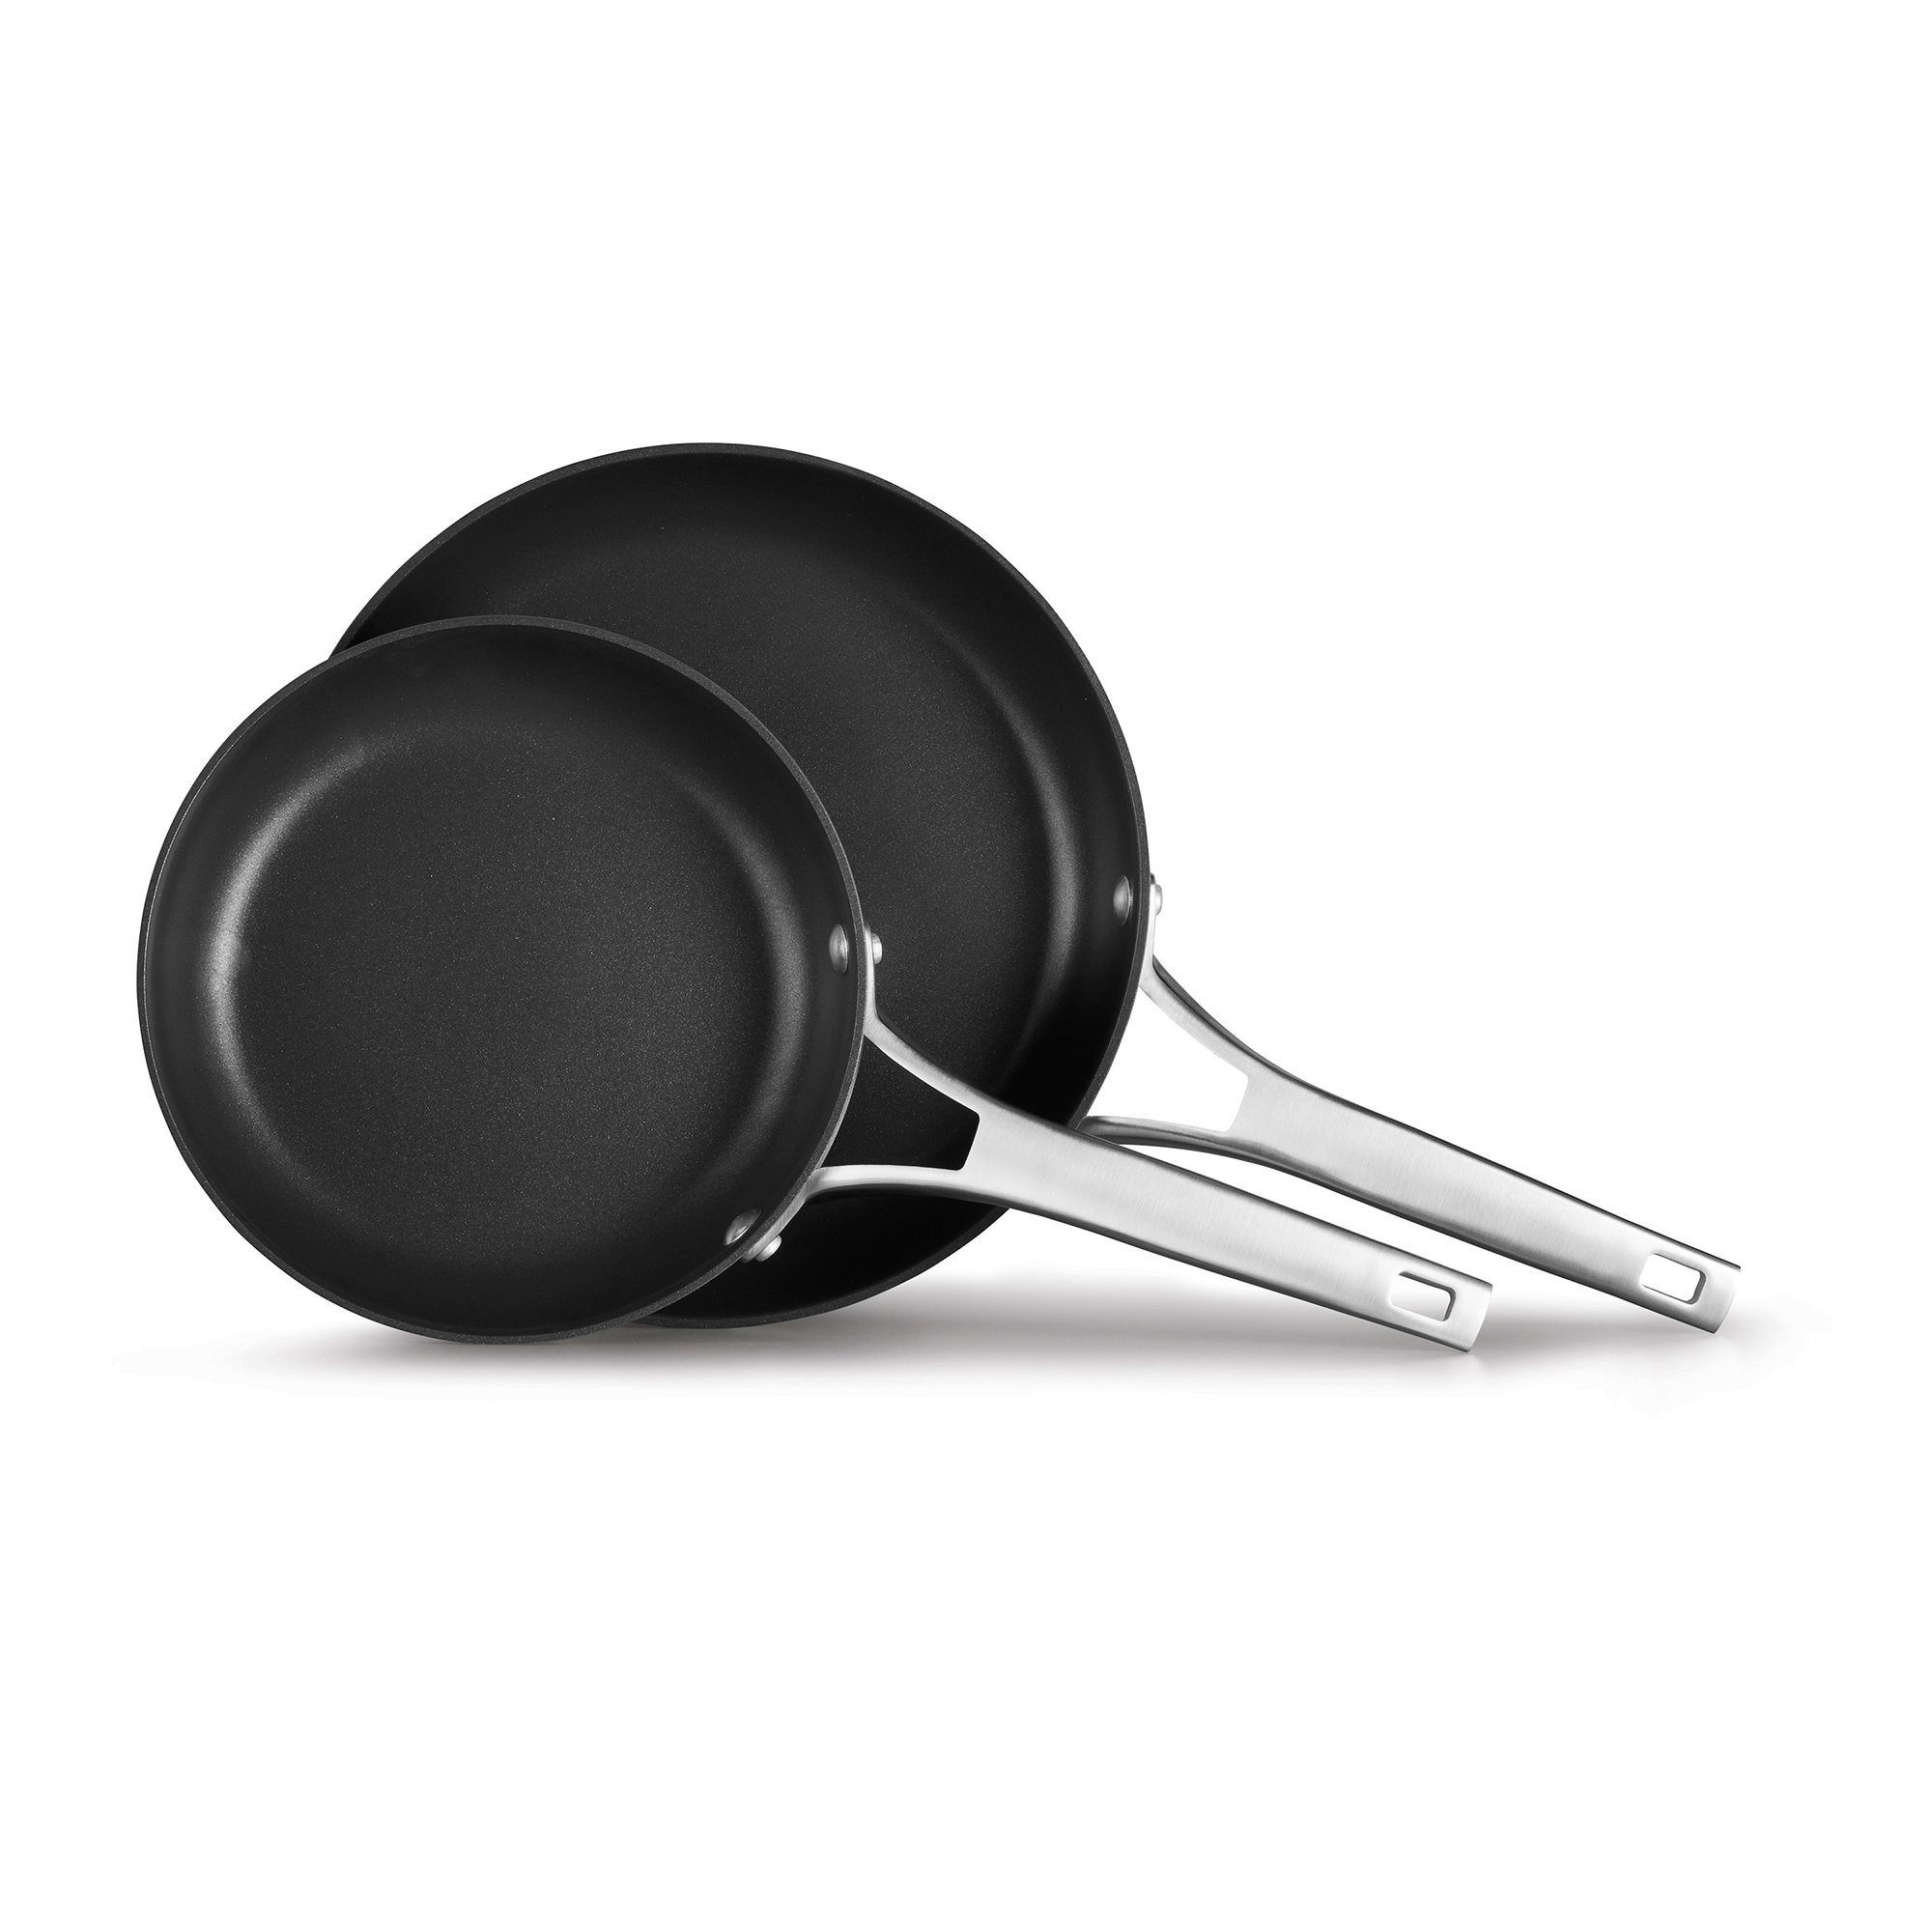 Calphalon Signature 10-Piece Non-Stick Cookware Set with Bonus 12